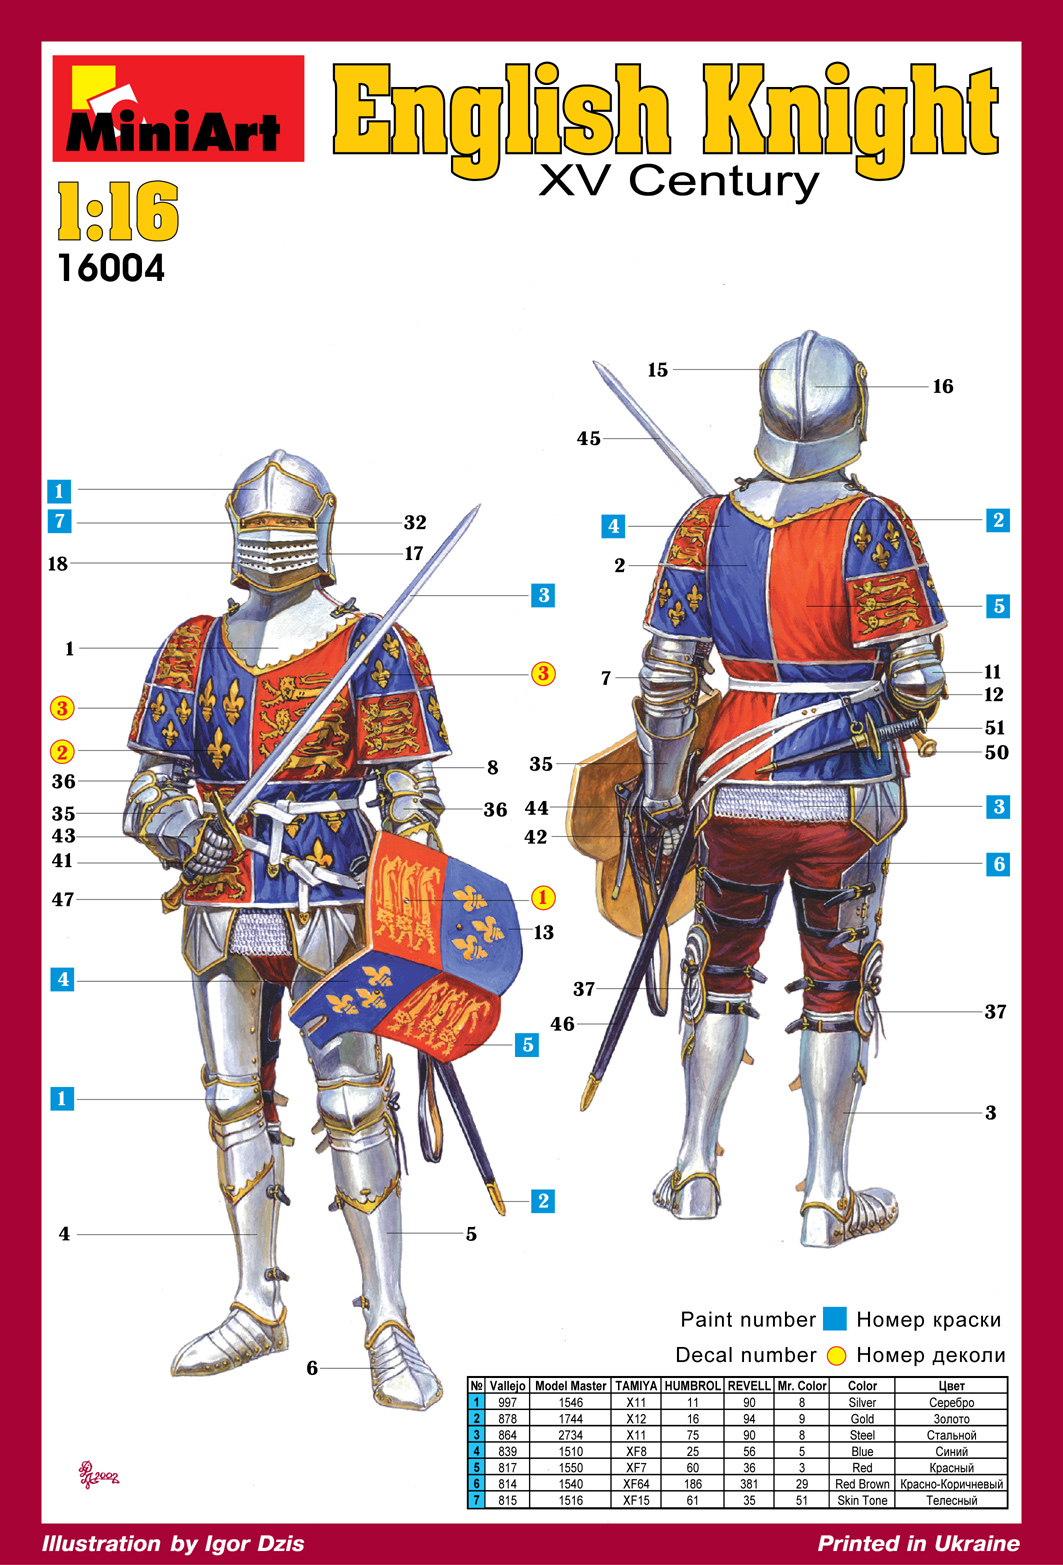 MINIART 1:72 Variety of set XV Century Knights 16 Sets 6 varieties. 